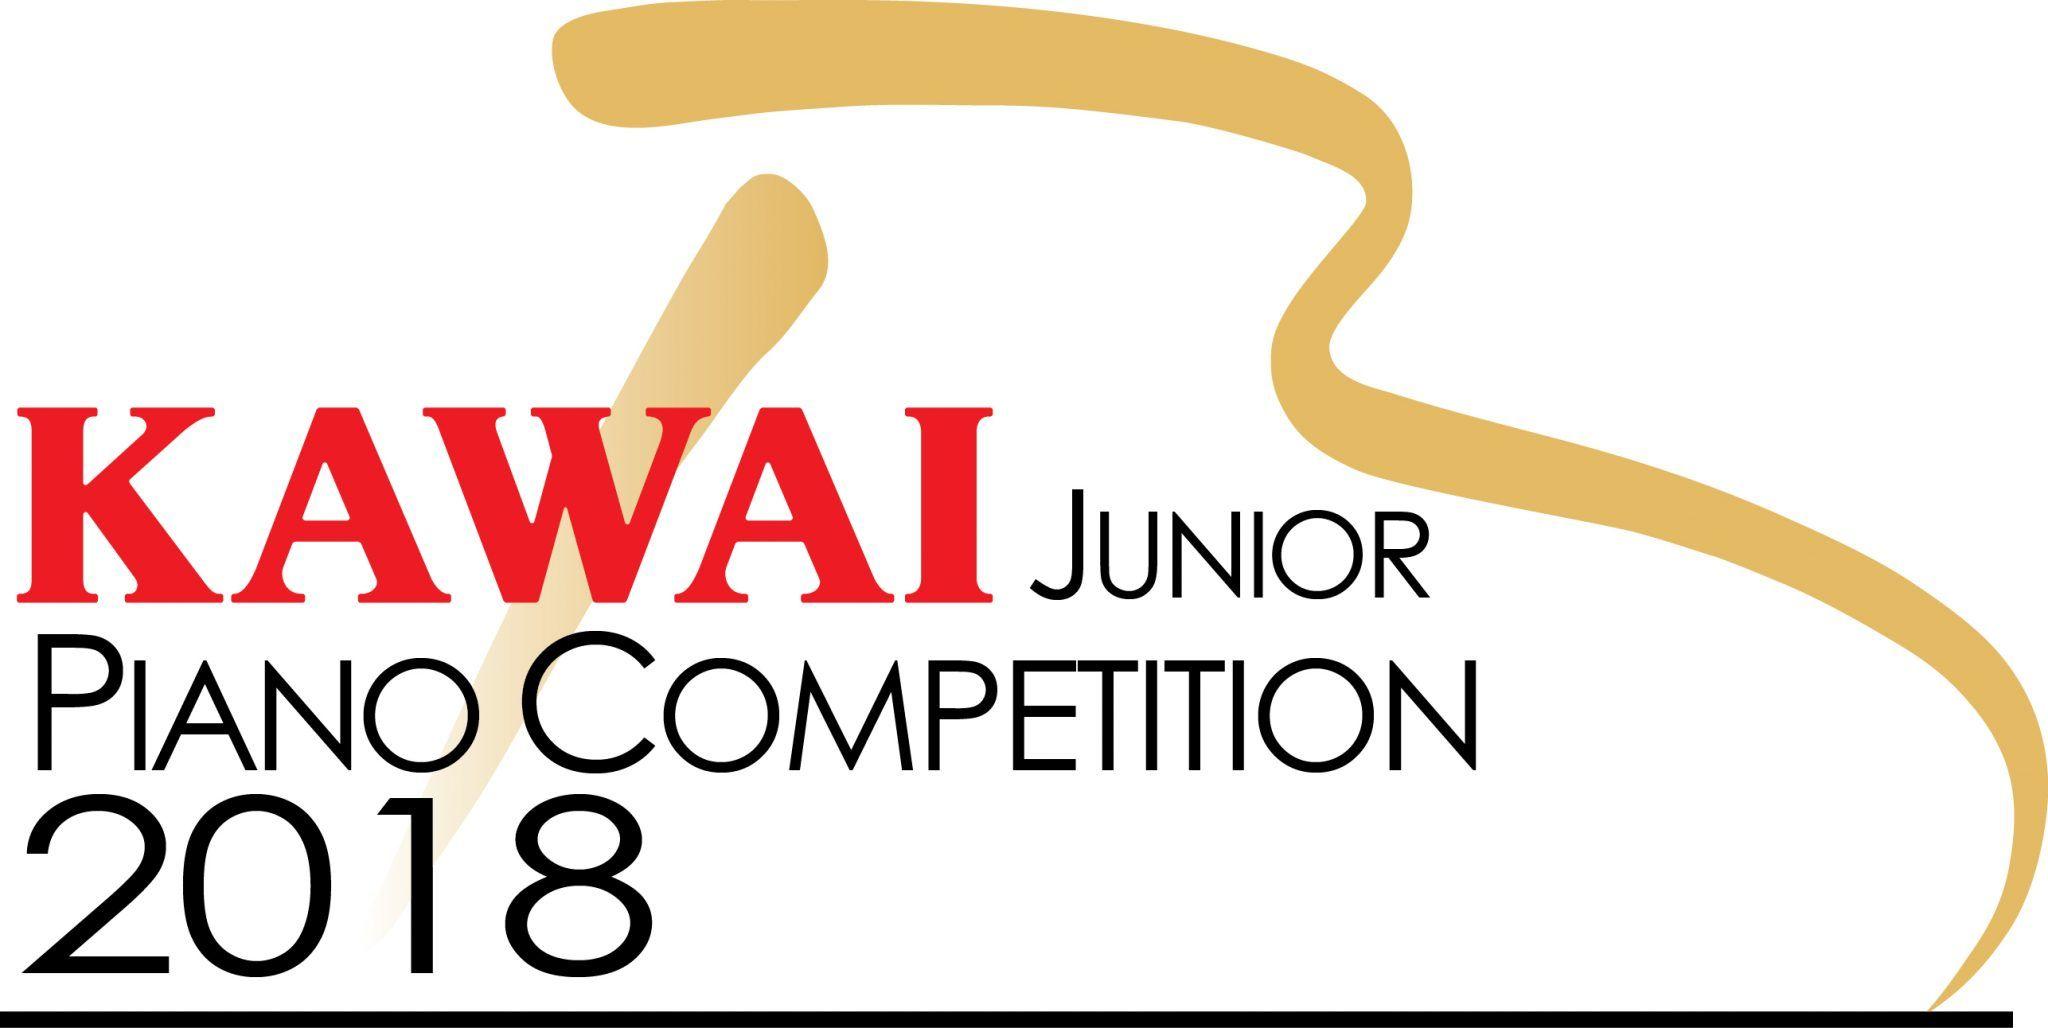 Kawai Logo - KAWAI Junior Piano Competition 2018 (Season 5)